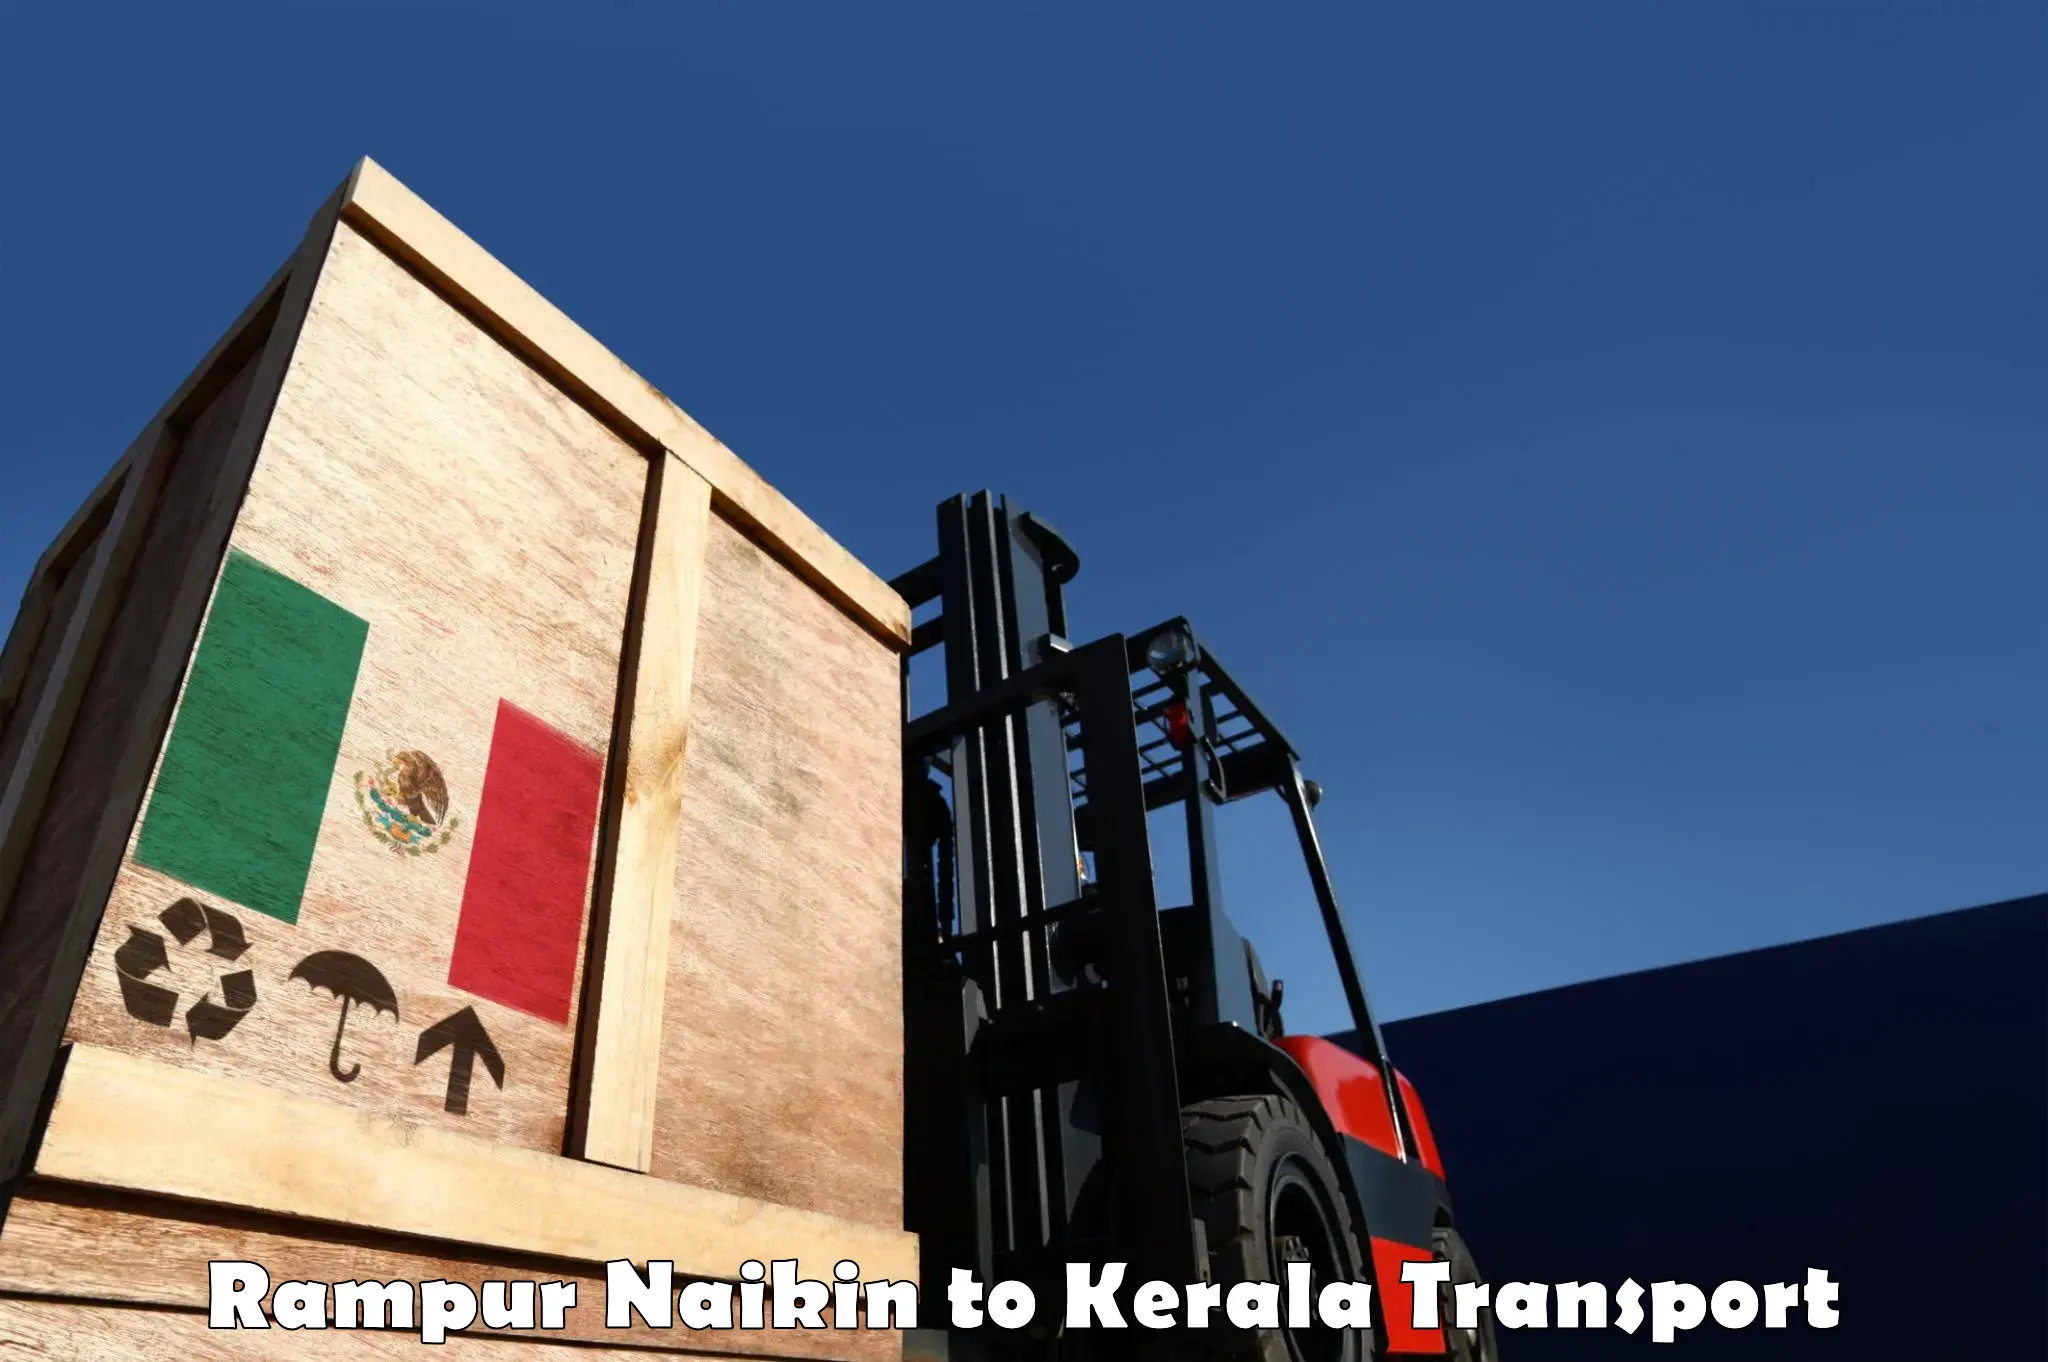 Express transport services in Rampur Naikin to Cochin Port Kochi